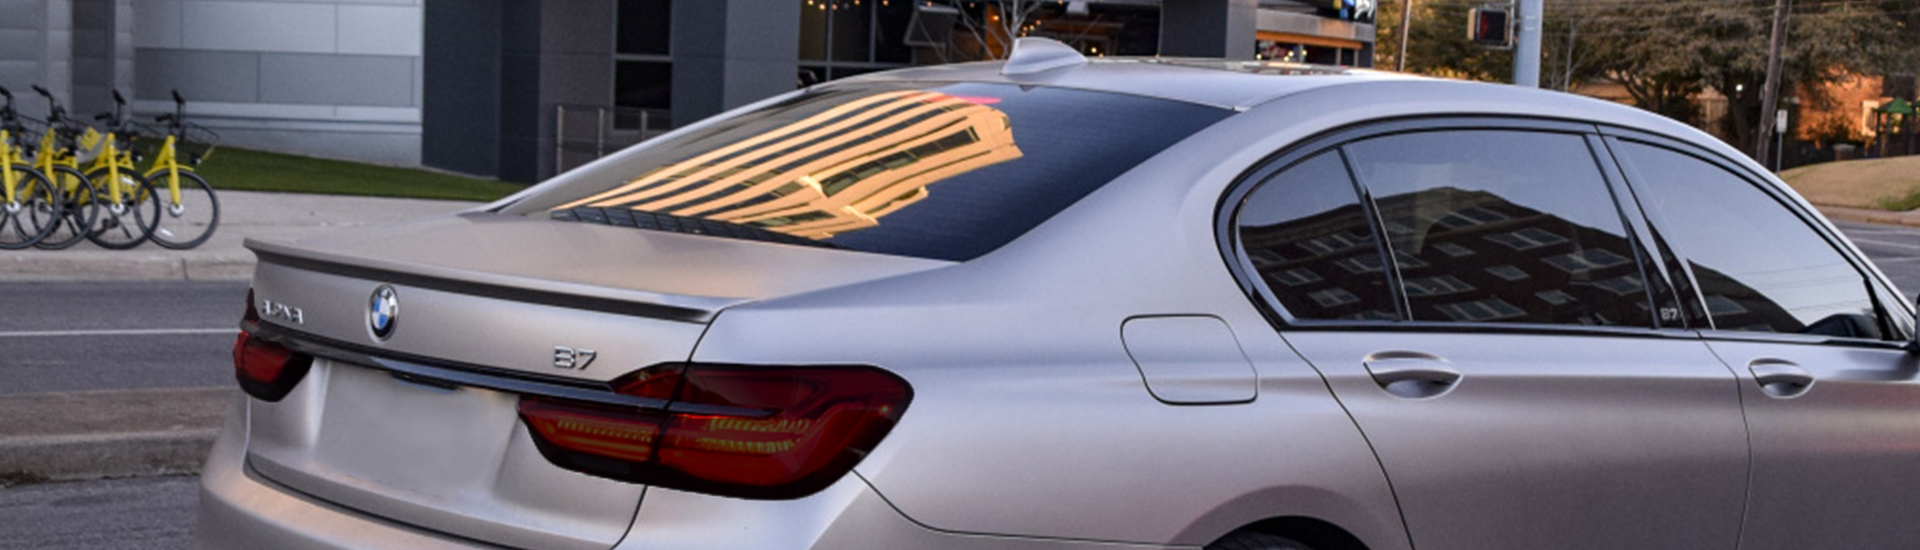 BMW Alpina B7 Tail Light Tint Covers